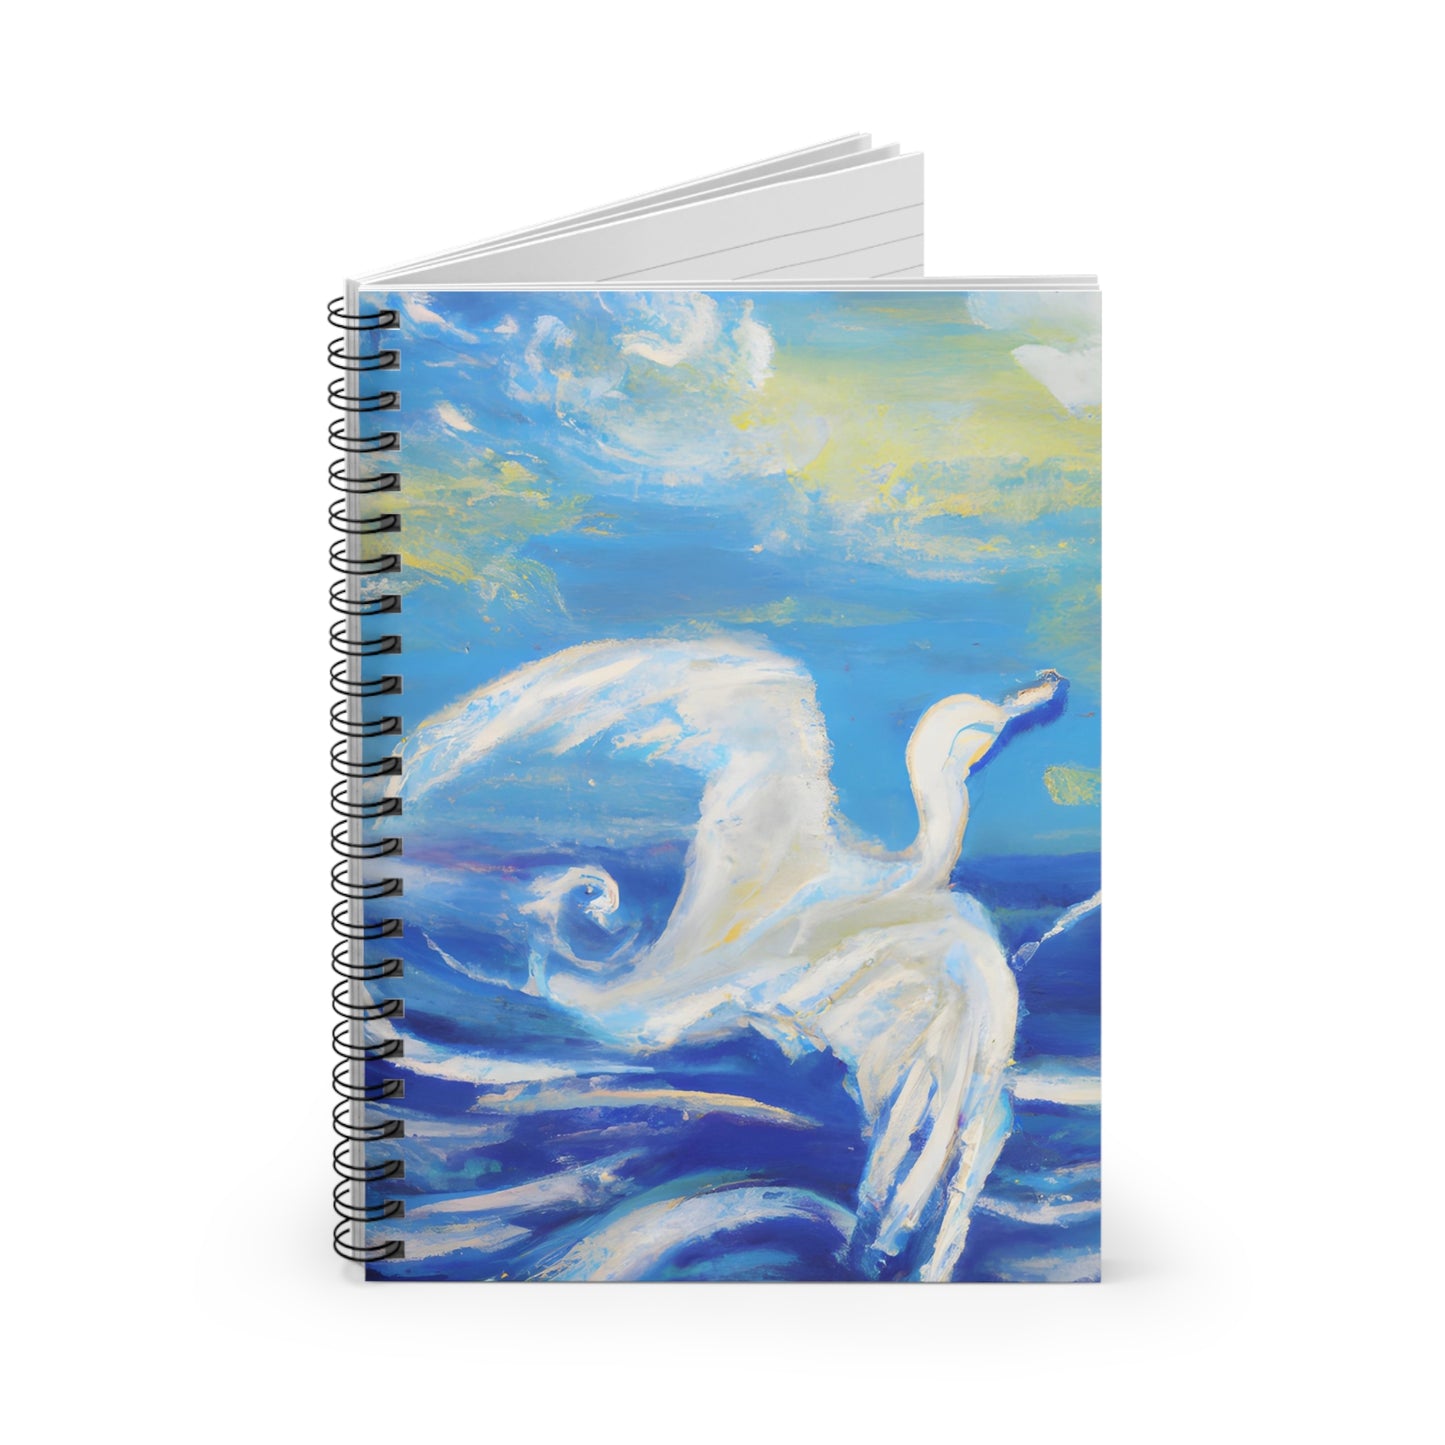 CalmDawn Notebook Journal